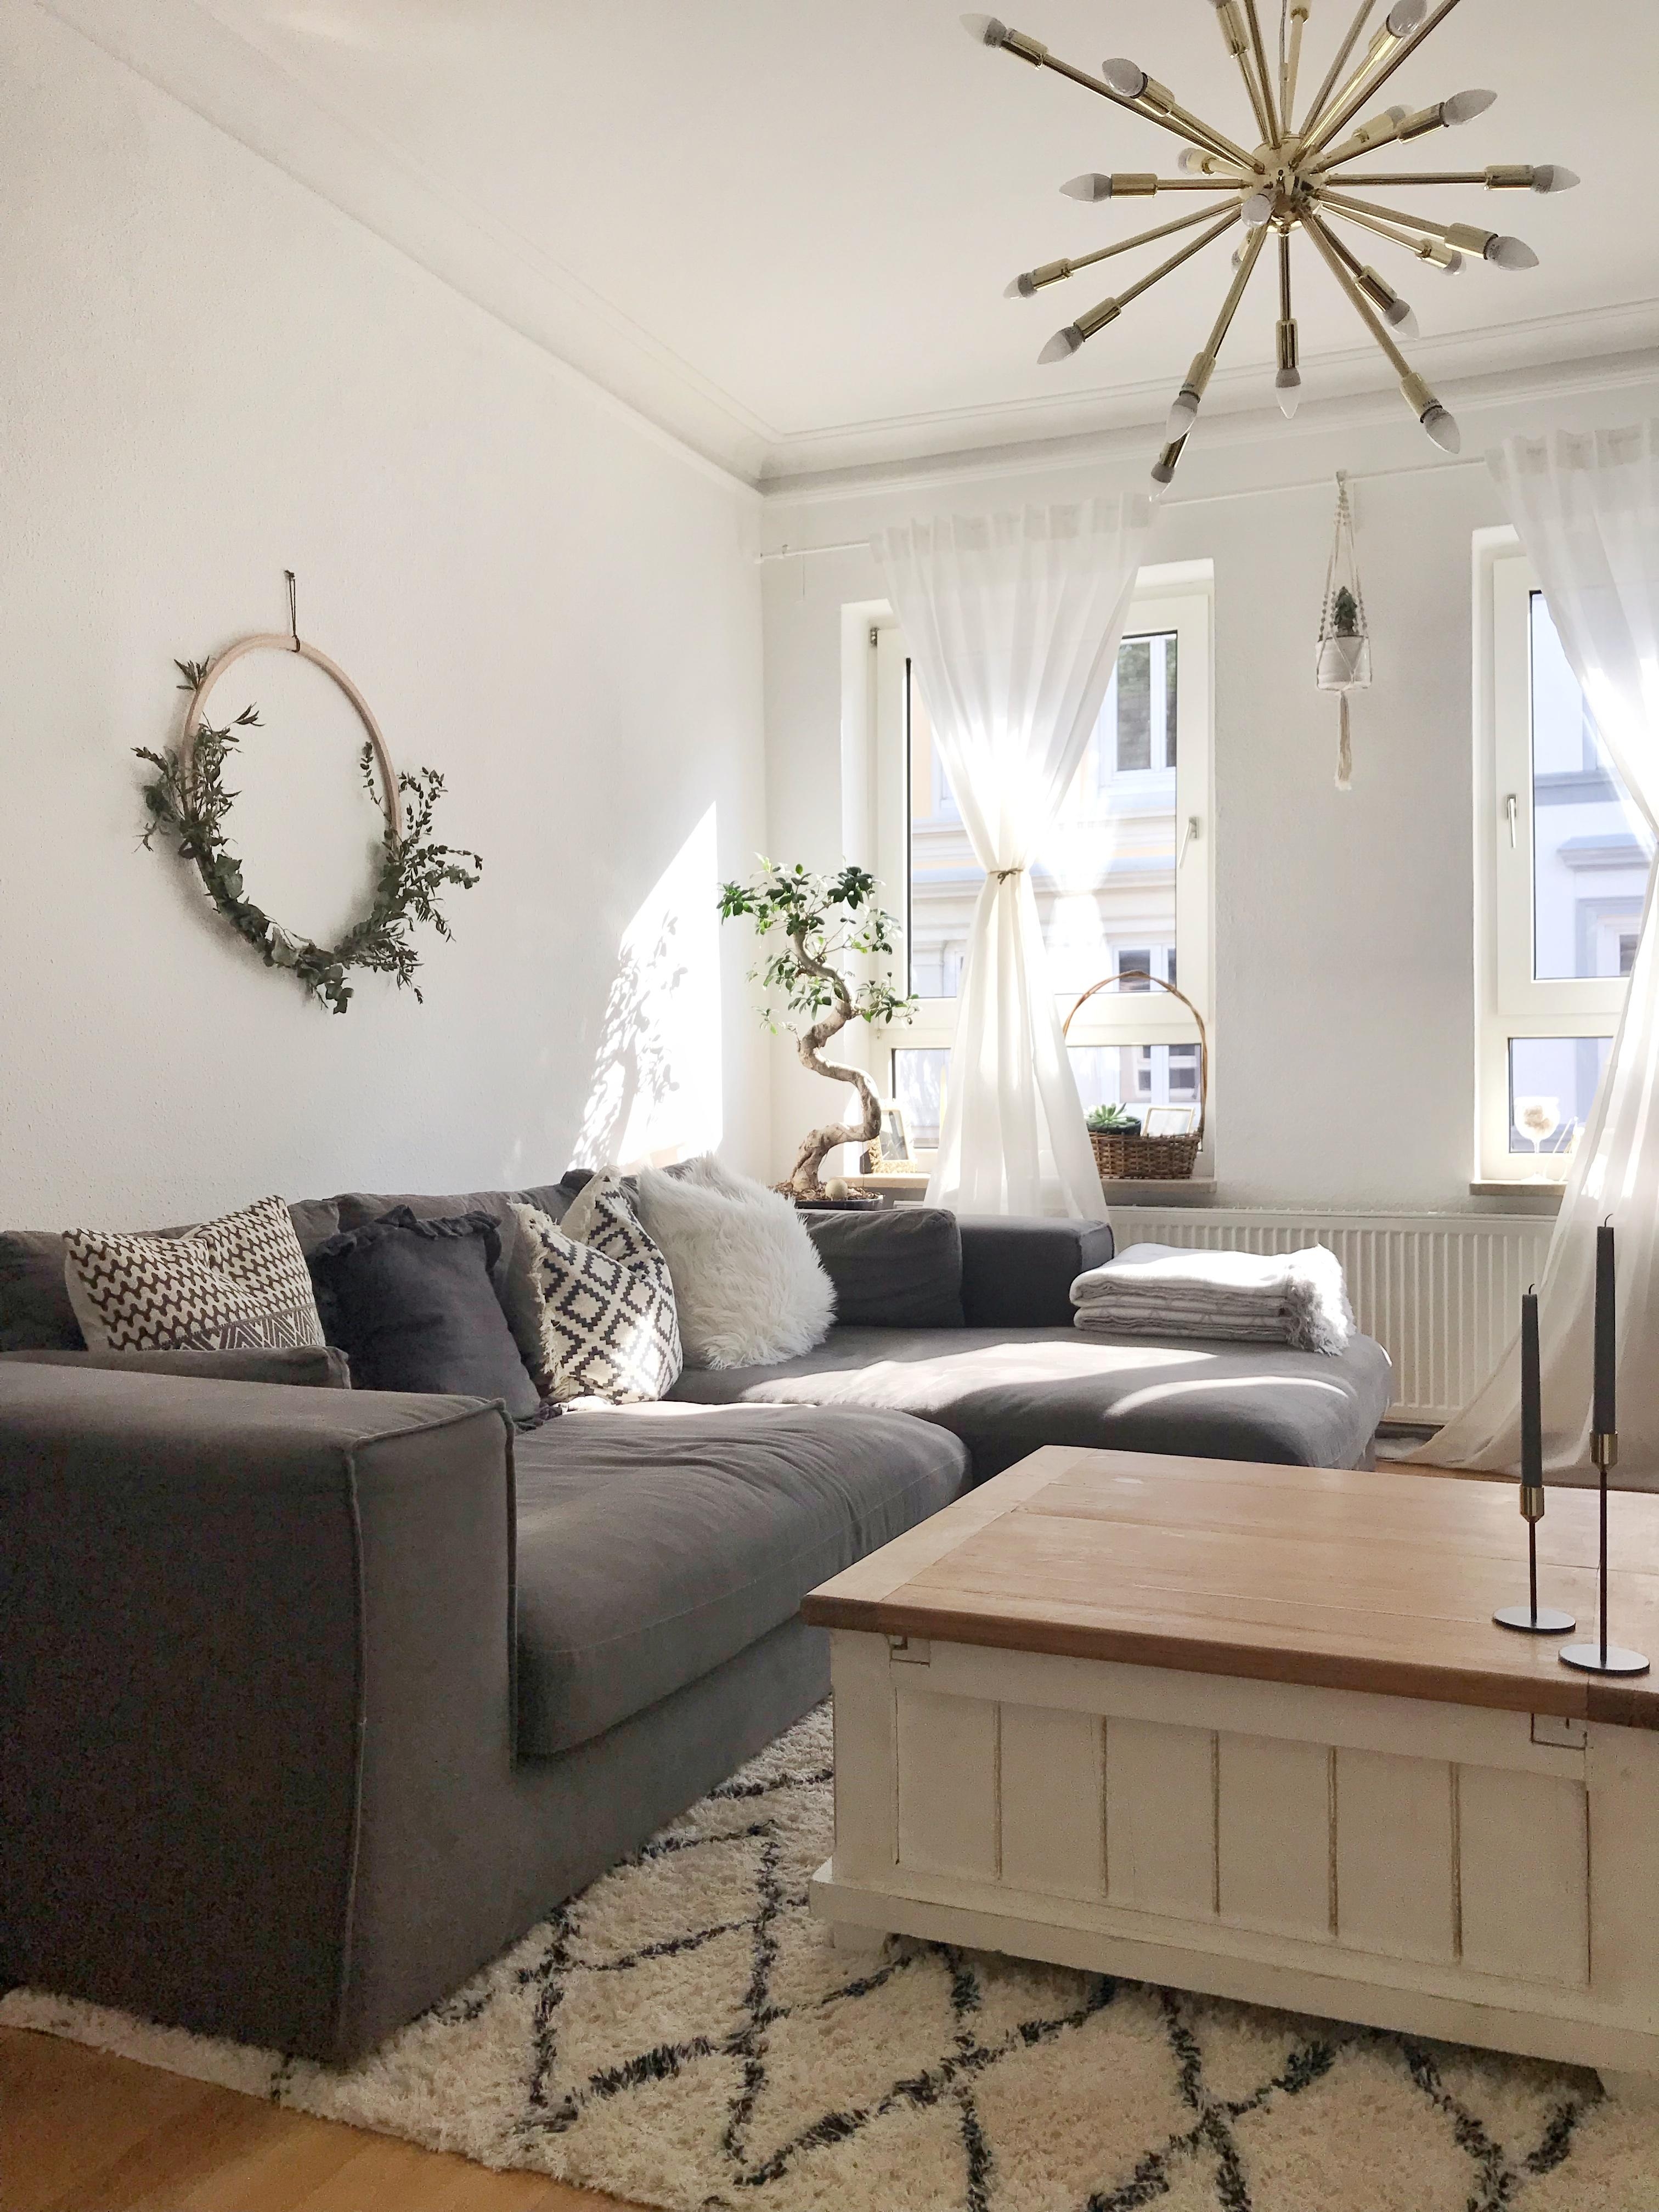 #livingroom #sunlight #cozy #couch #favoriteplace #interiorgoals